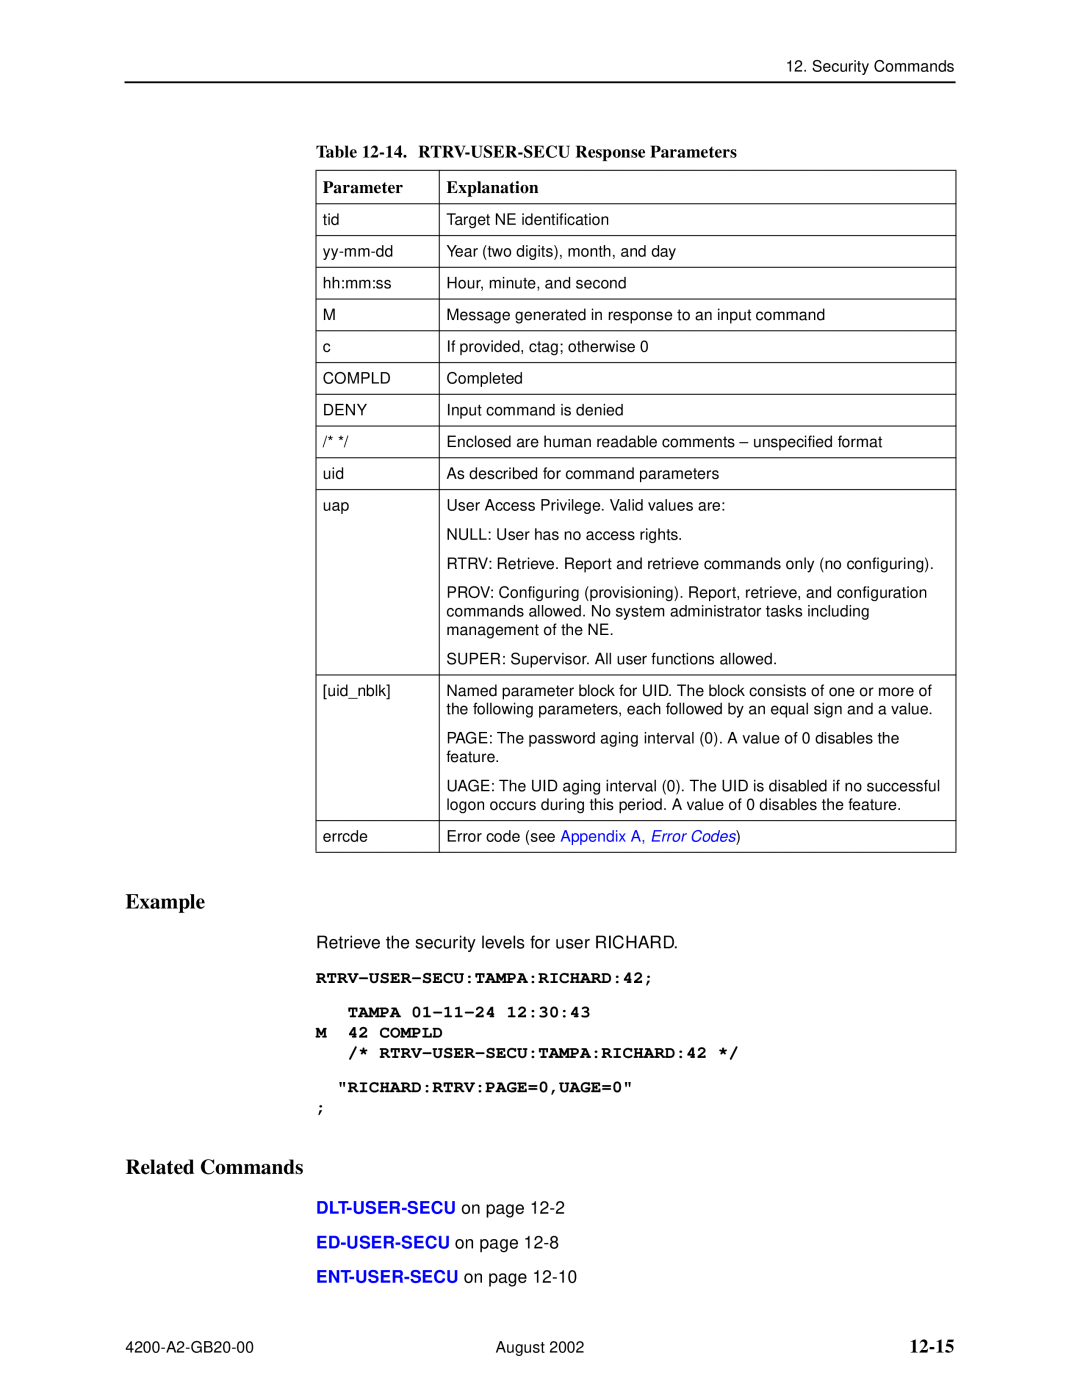 Paradyne 4200 manual 12-15, 14. RTRV-USER-SECU Response Parameters, RTRV-USER-SECUTAMPARICHARD42 TAMPA 01-11-24 M 42 COMPLD 